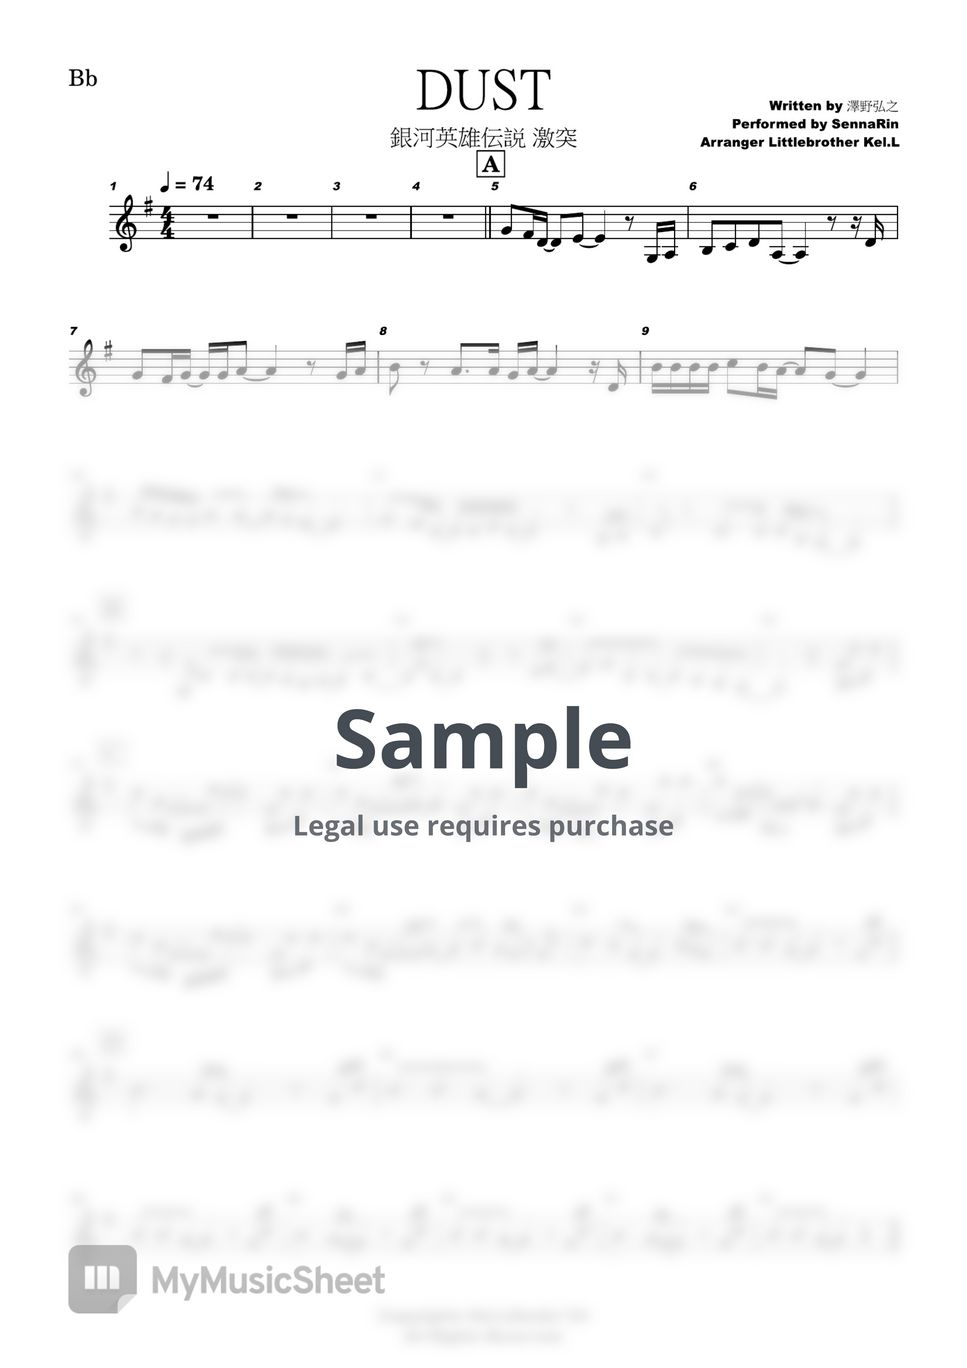 SennaRin - DUST (C/ Bb/ F/ Eb  solo sheet) by littlebrother Kel.L